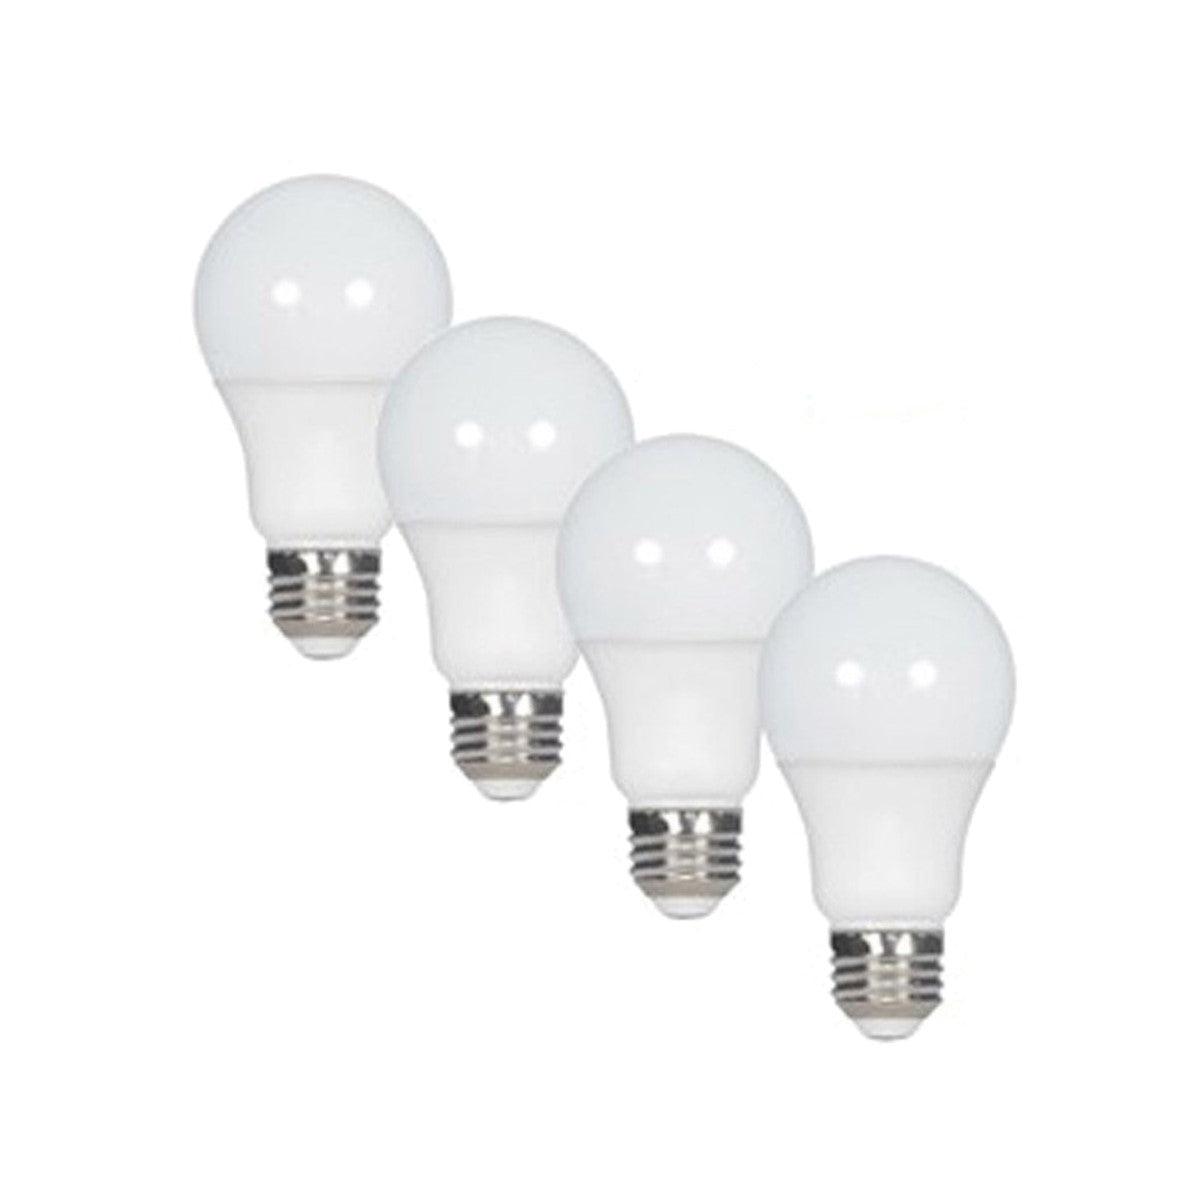 A19 LED Bulb, 100W Equivalent, 16 Watt, 1490 Lumens, 3000K, E26 Medium Base, Frosted Finish, Pack Of 4 - Bees Lighting